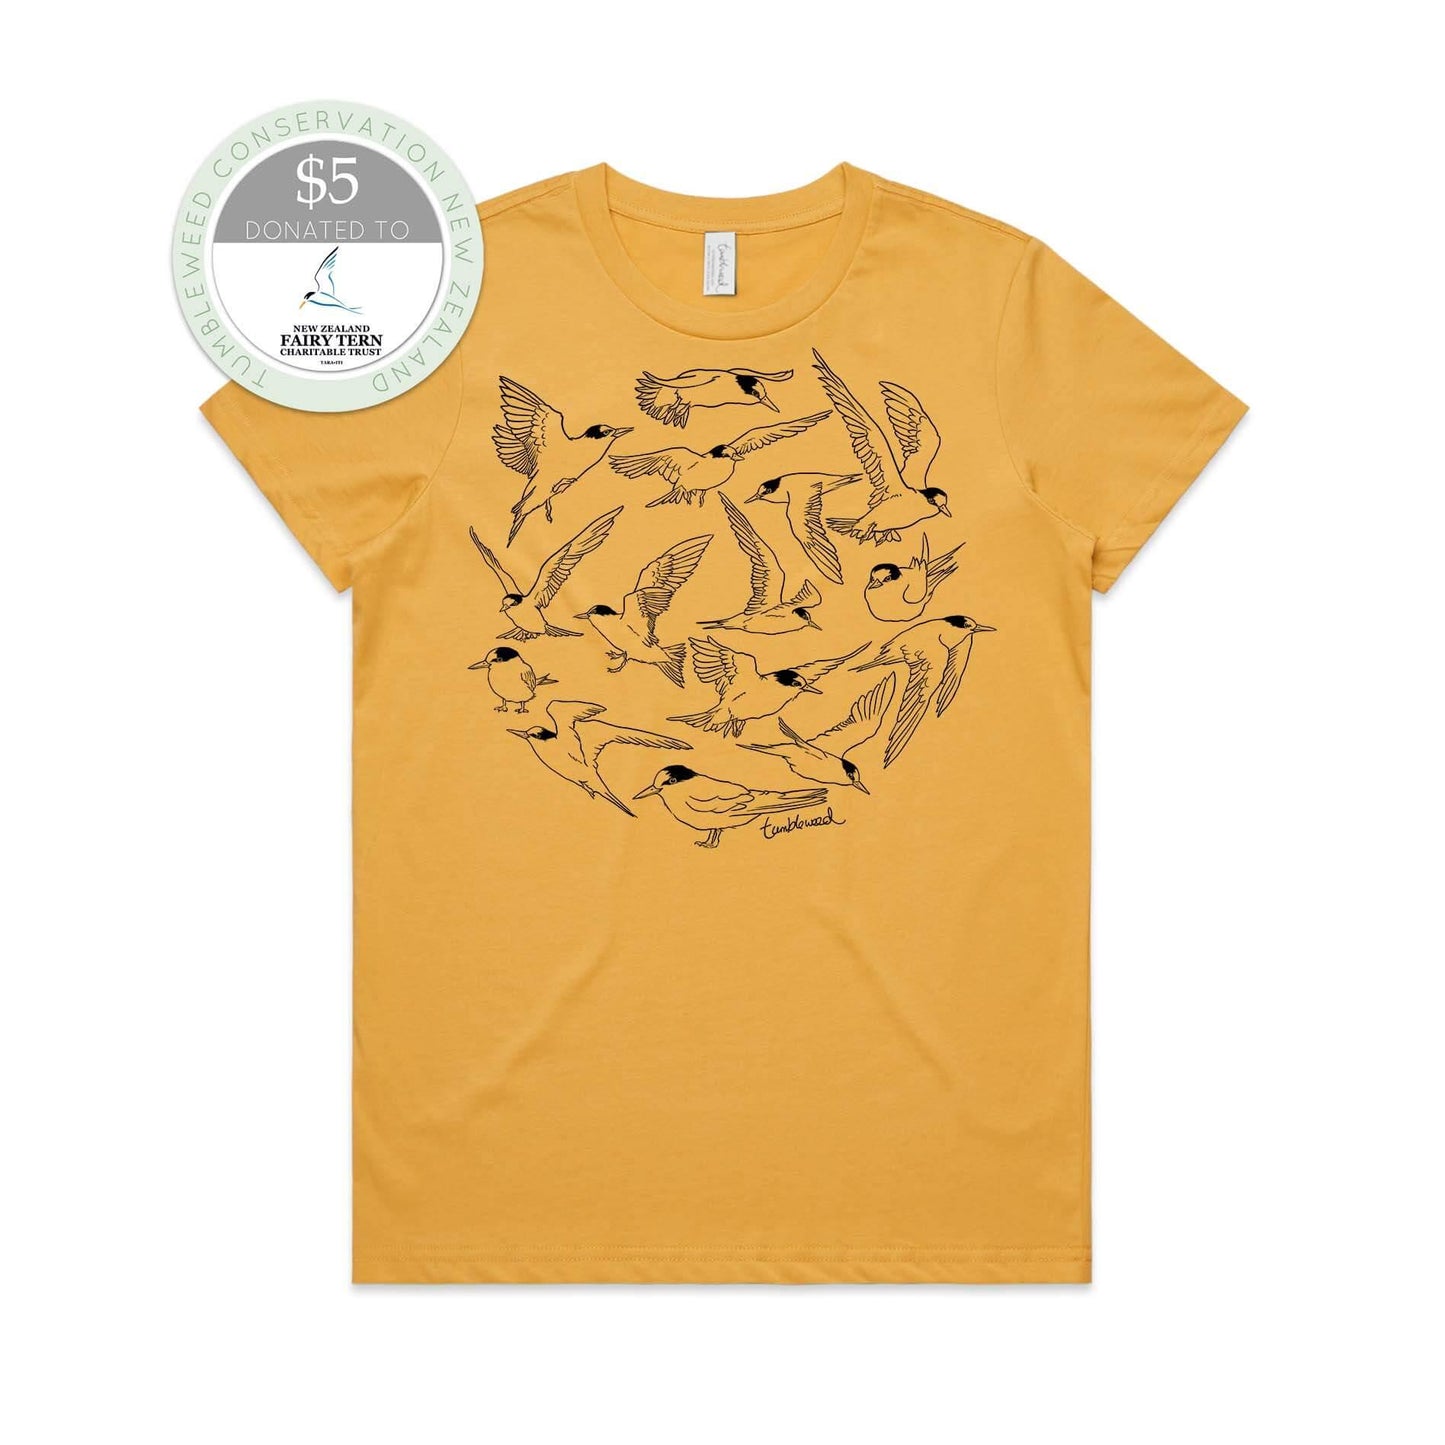 Mustard, female t-shirt featuring a screen printed black fairy tern/tara iti design.